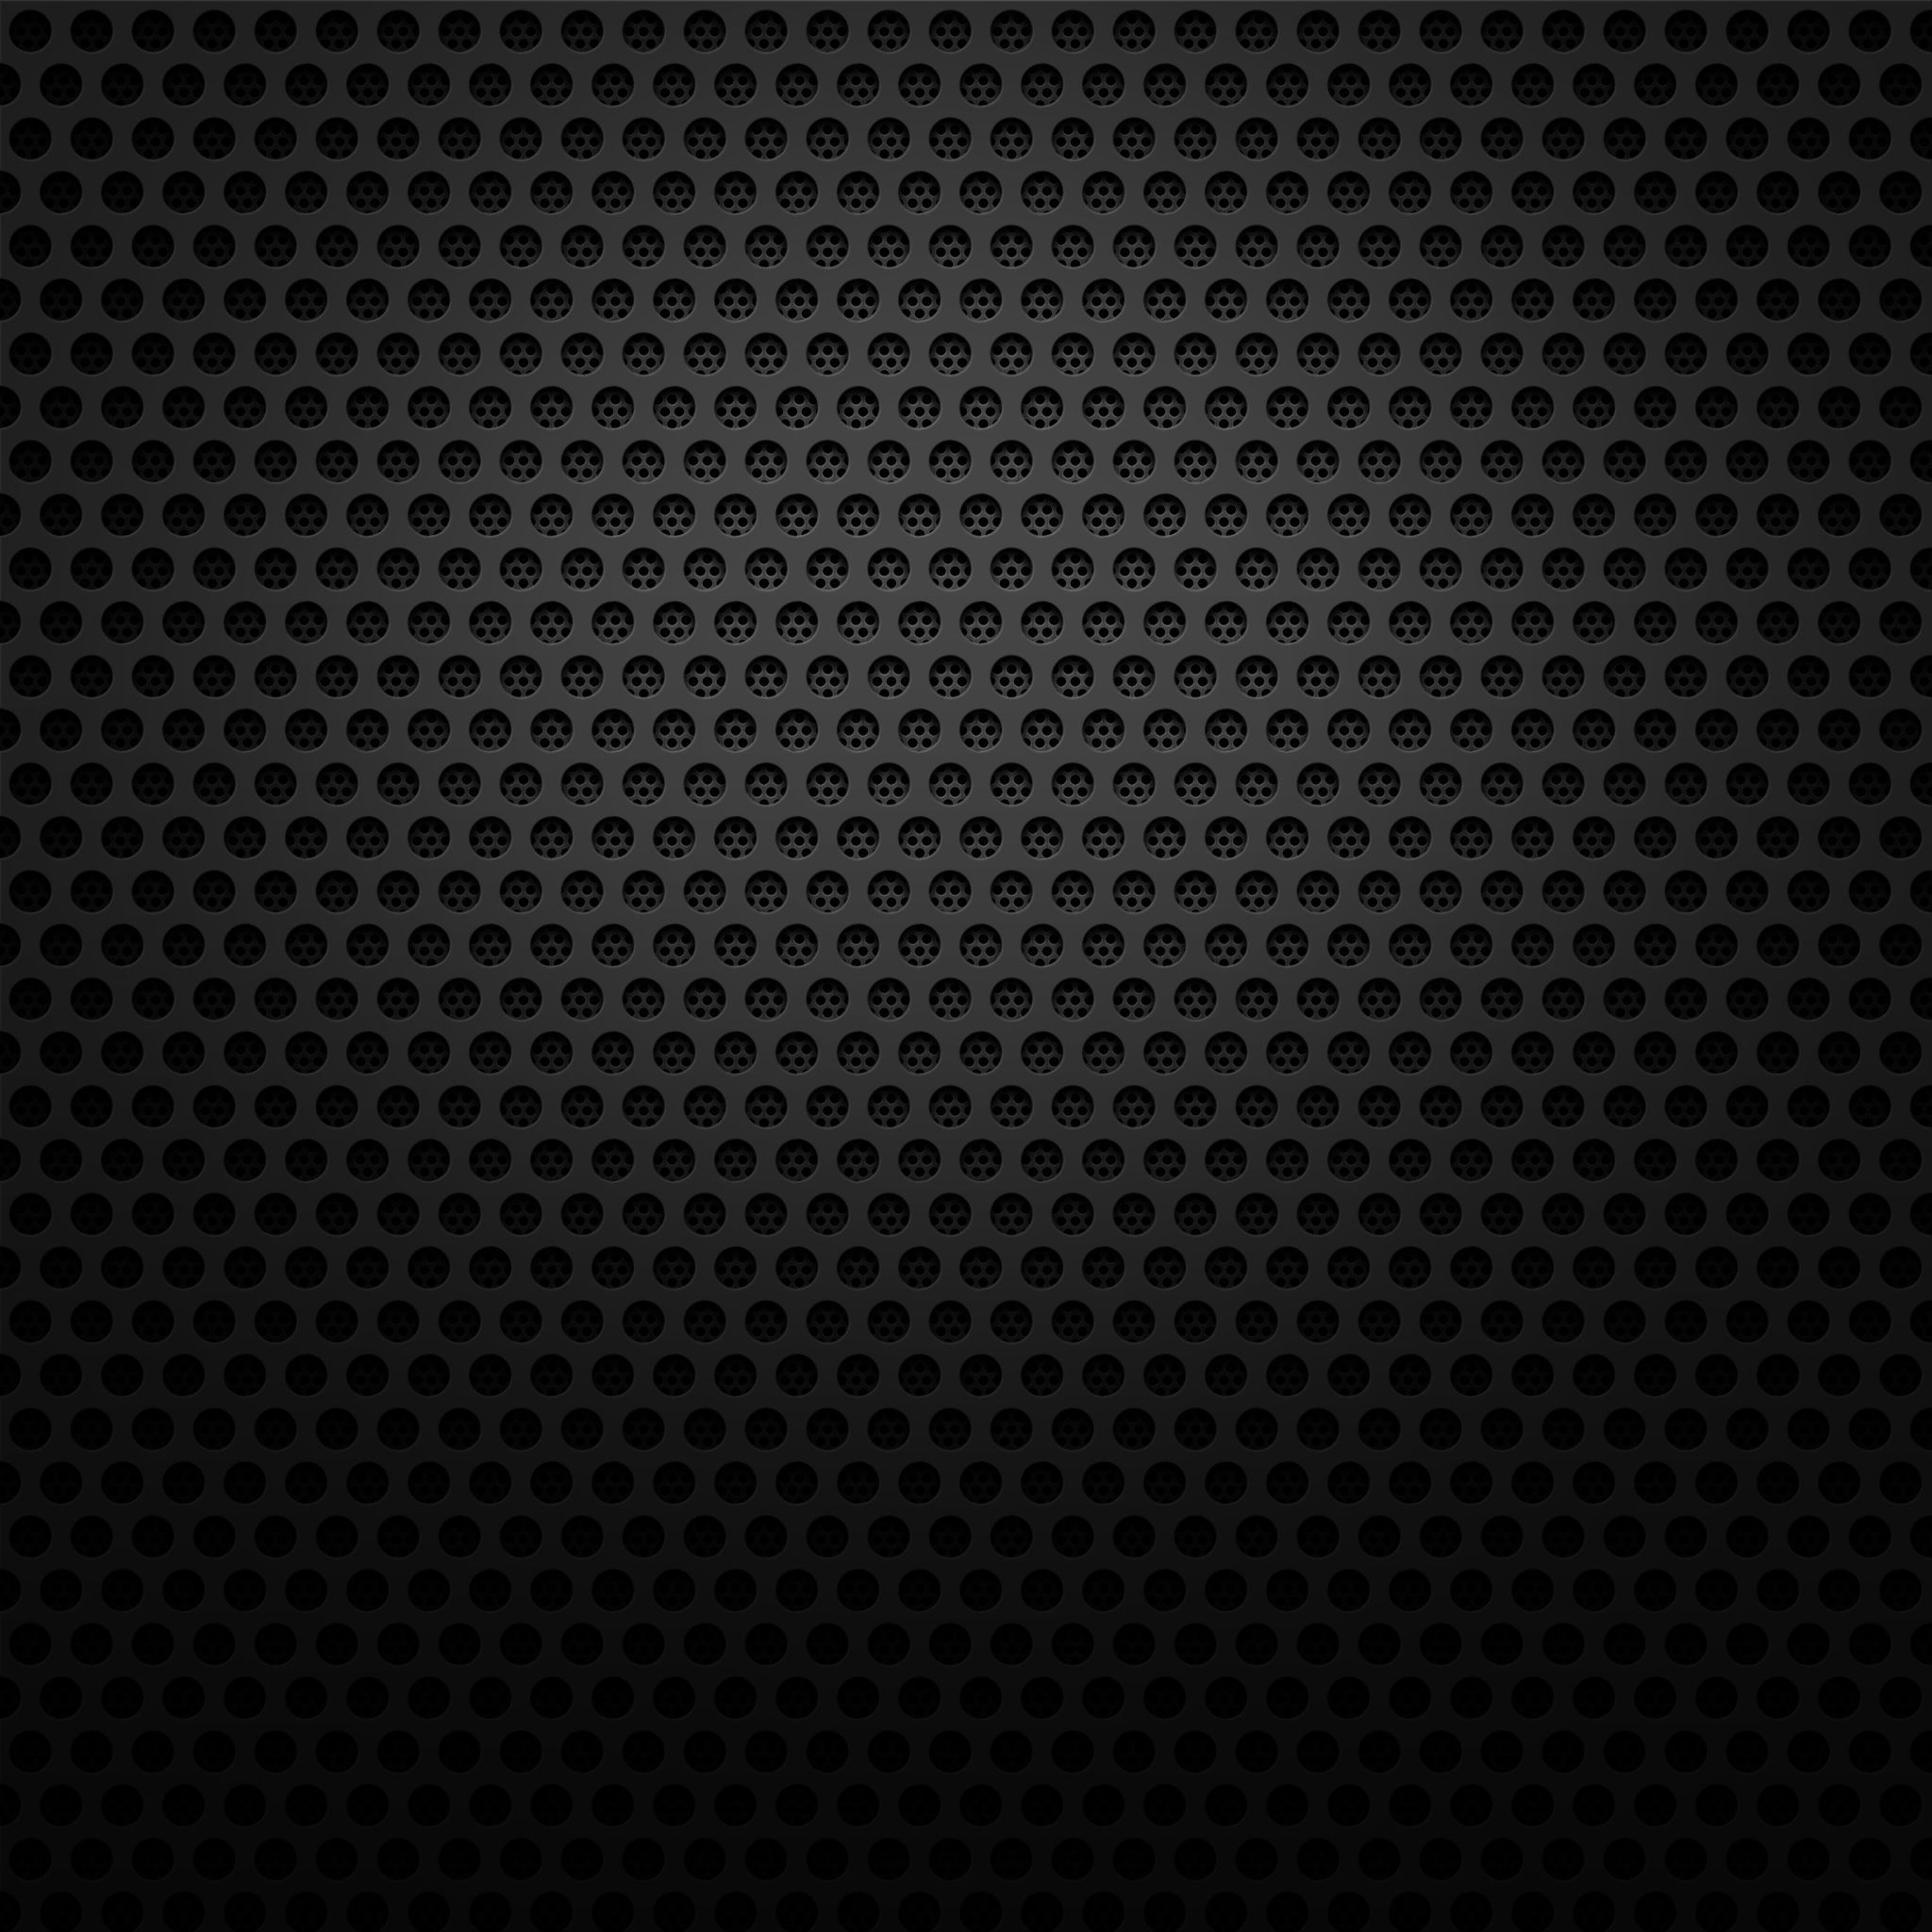 Black Hole iPad Air Wallpaper Download | iPhone Wallpapers, iPad ...